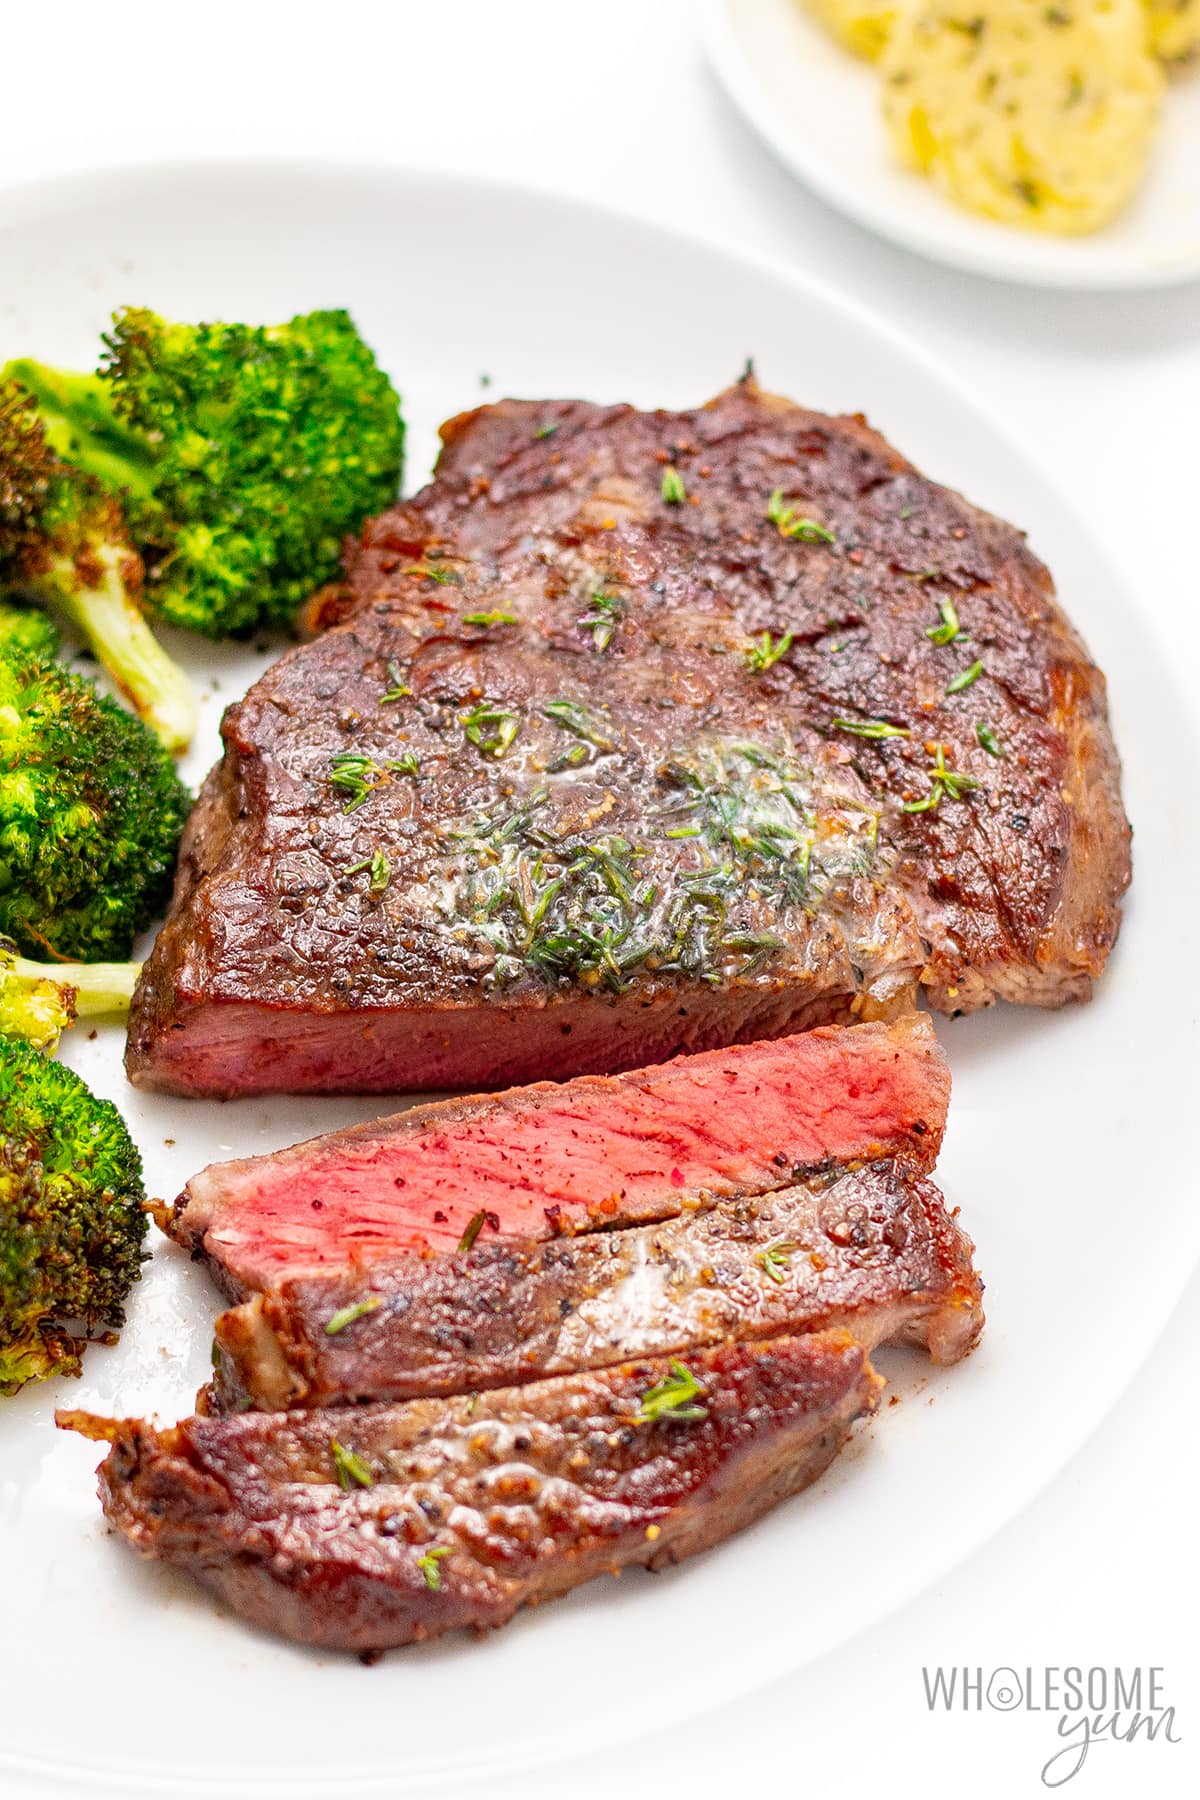 Beef chuck eye steak next to broccoli on a plate.